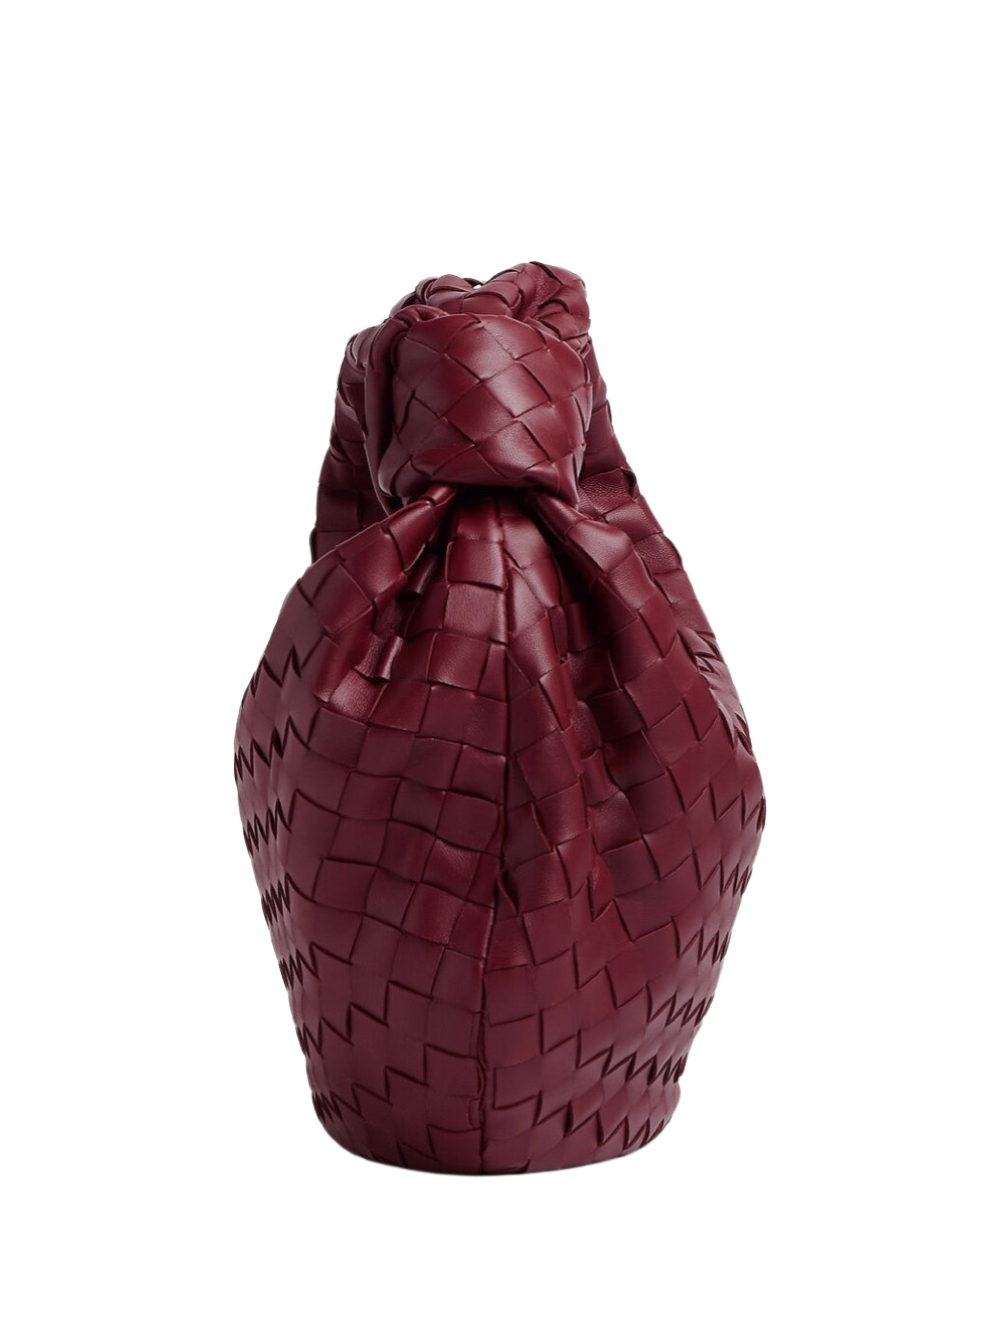 Bottega Veneta Vintage Pink Small Loop Intrecciato Leather Crossbody Bag, Best Price and Reviews